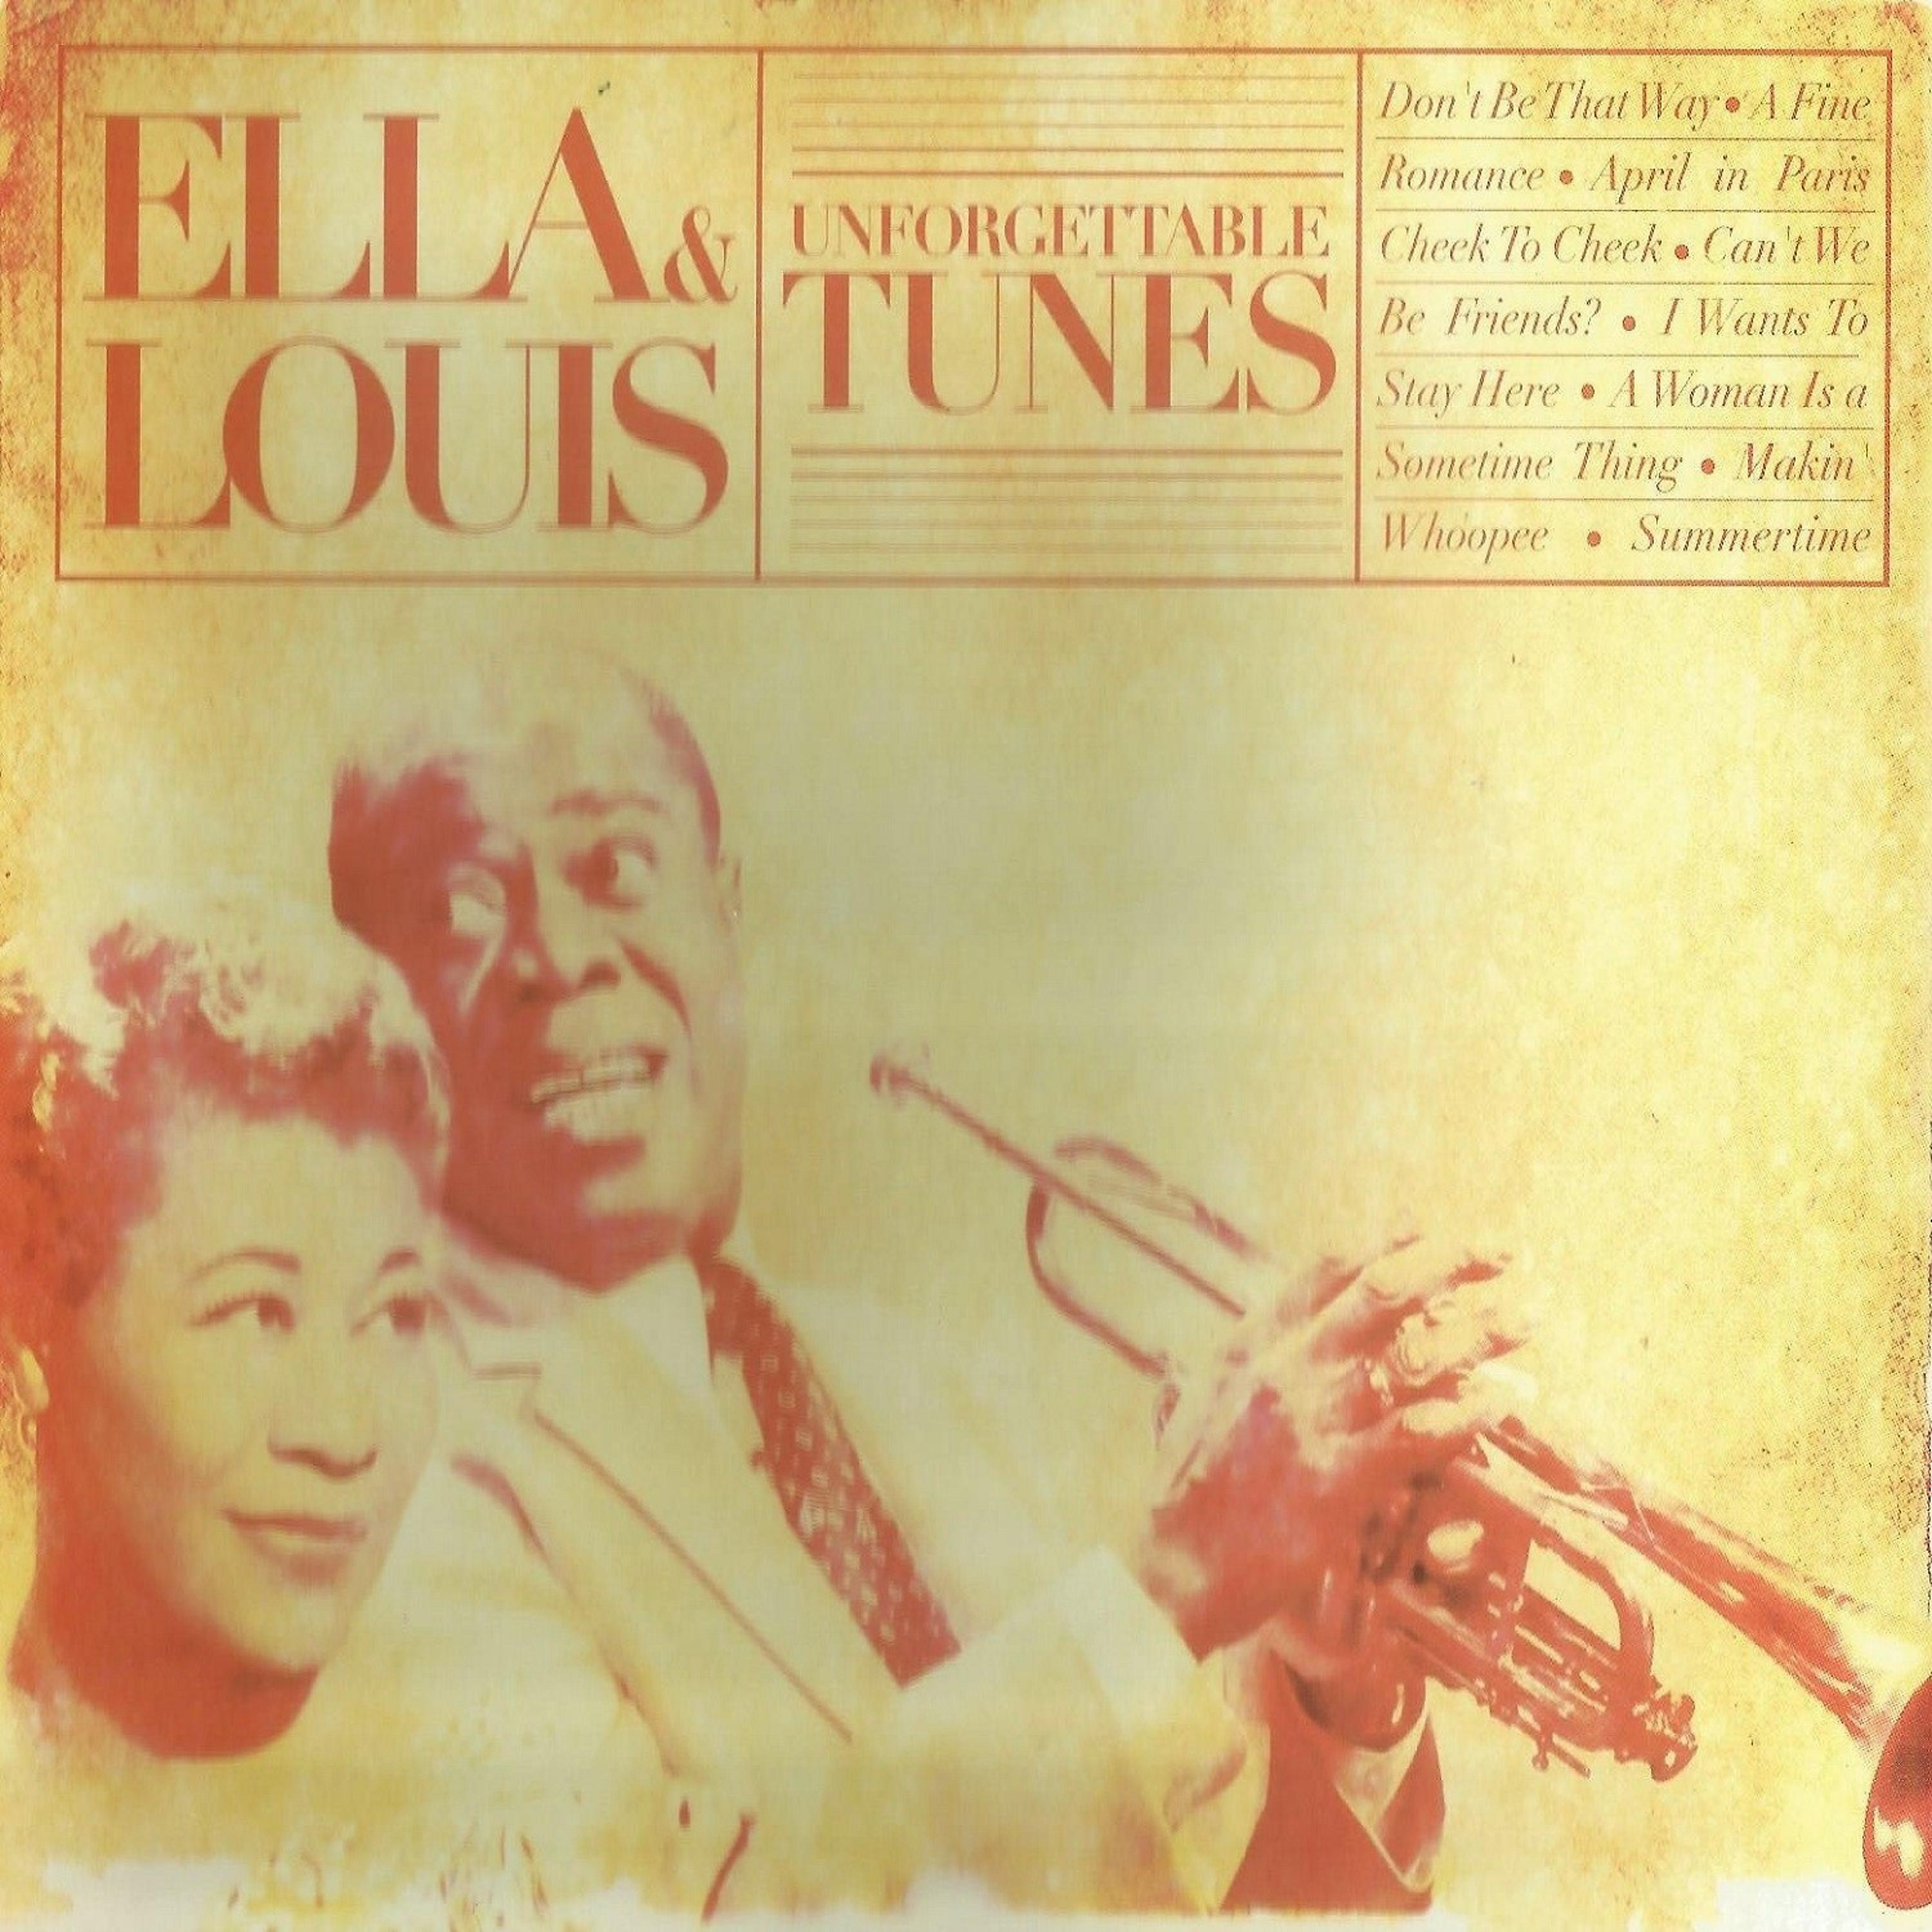 Постер альбома Ella & Louis, Unforgettable Tunes